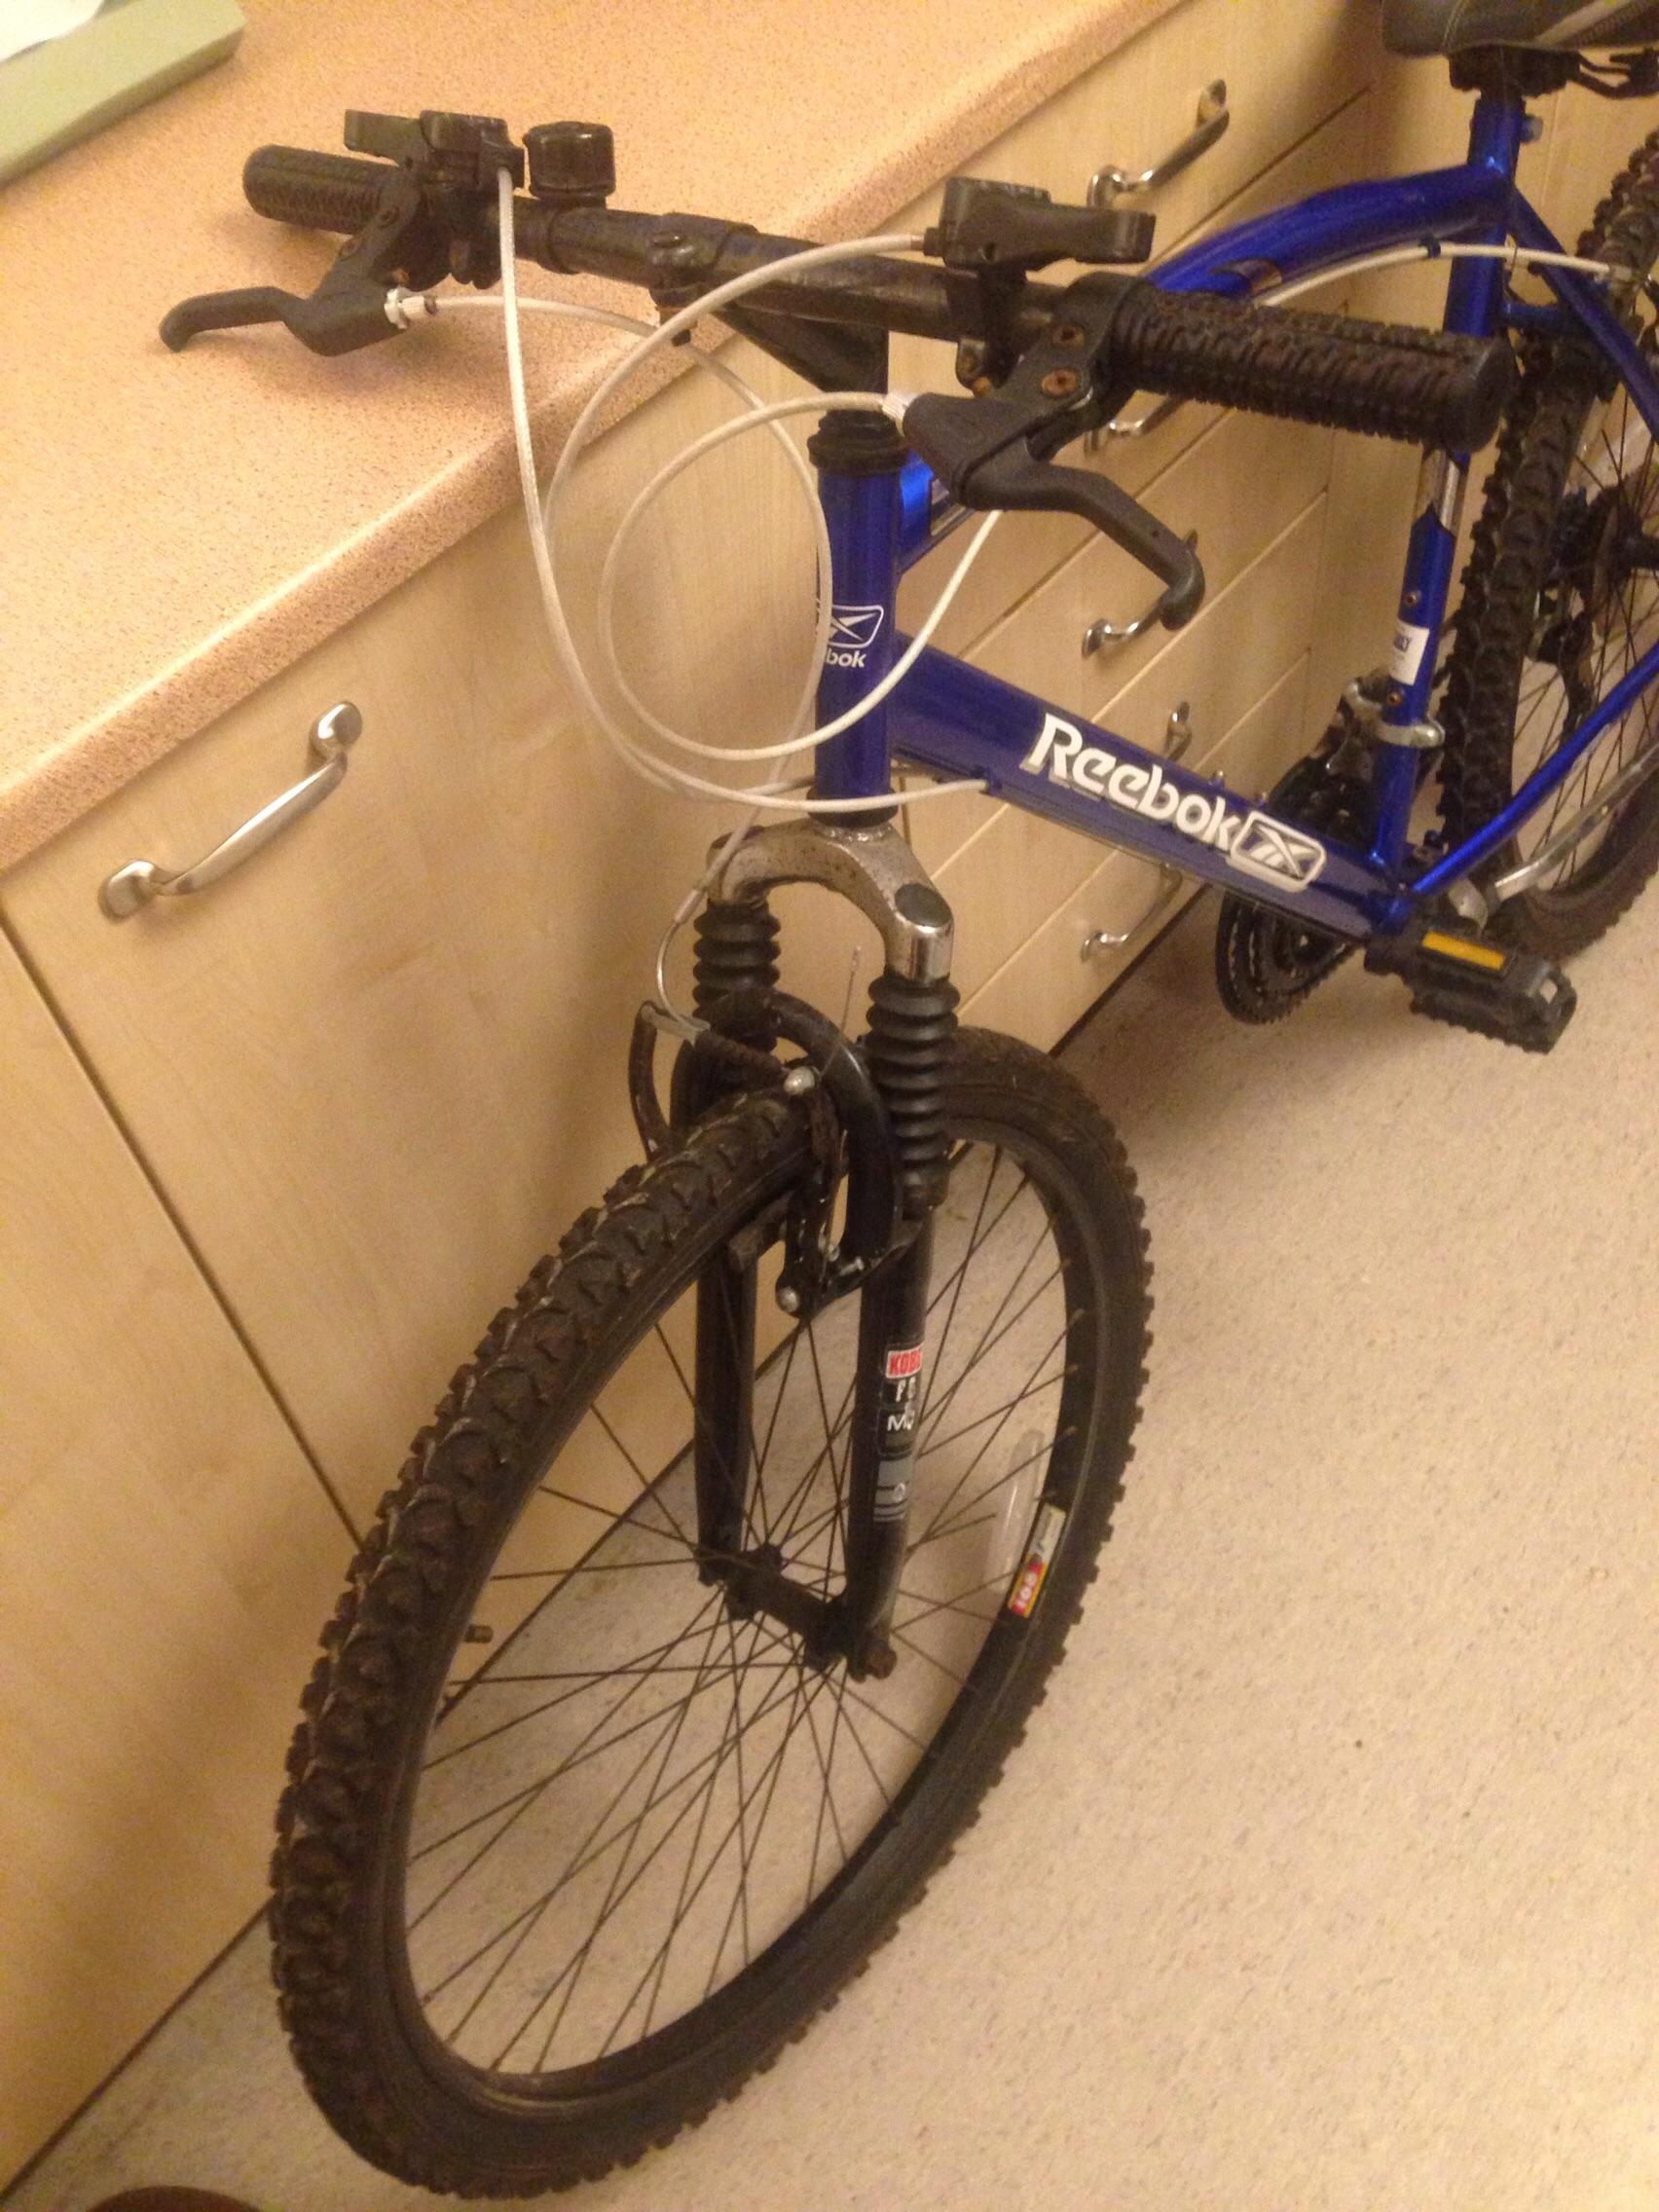 Reebok evolve Mountain bike in BA2 Bath 